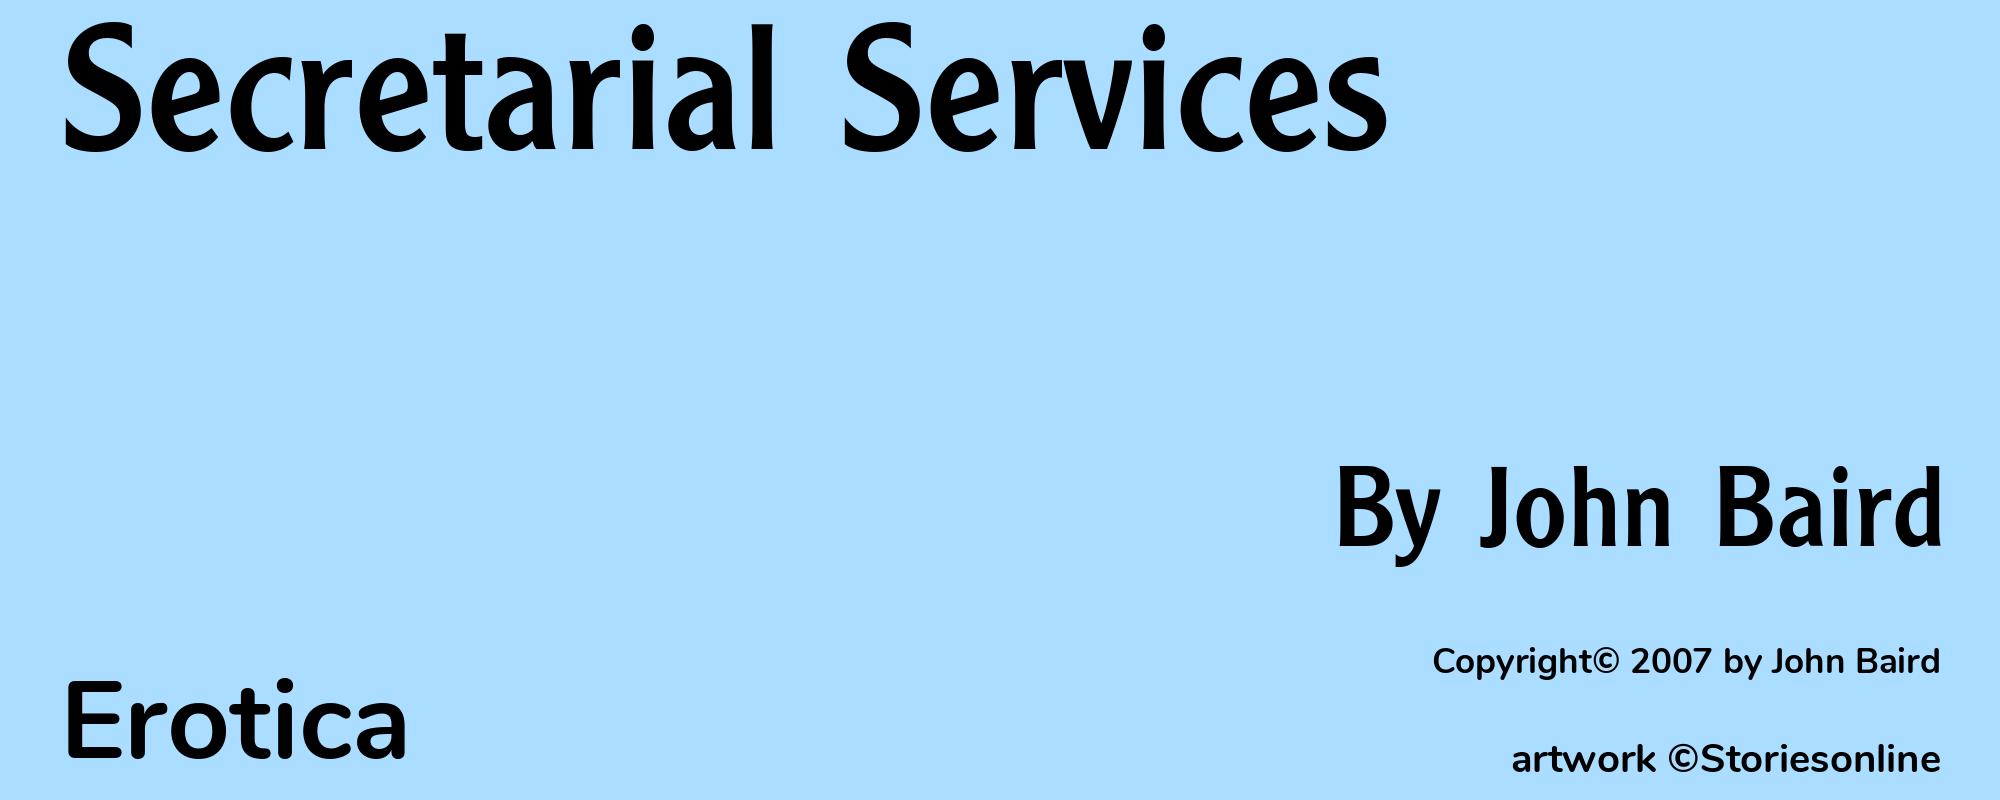 Secretarial Services - Cover